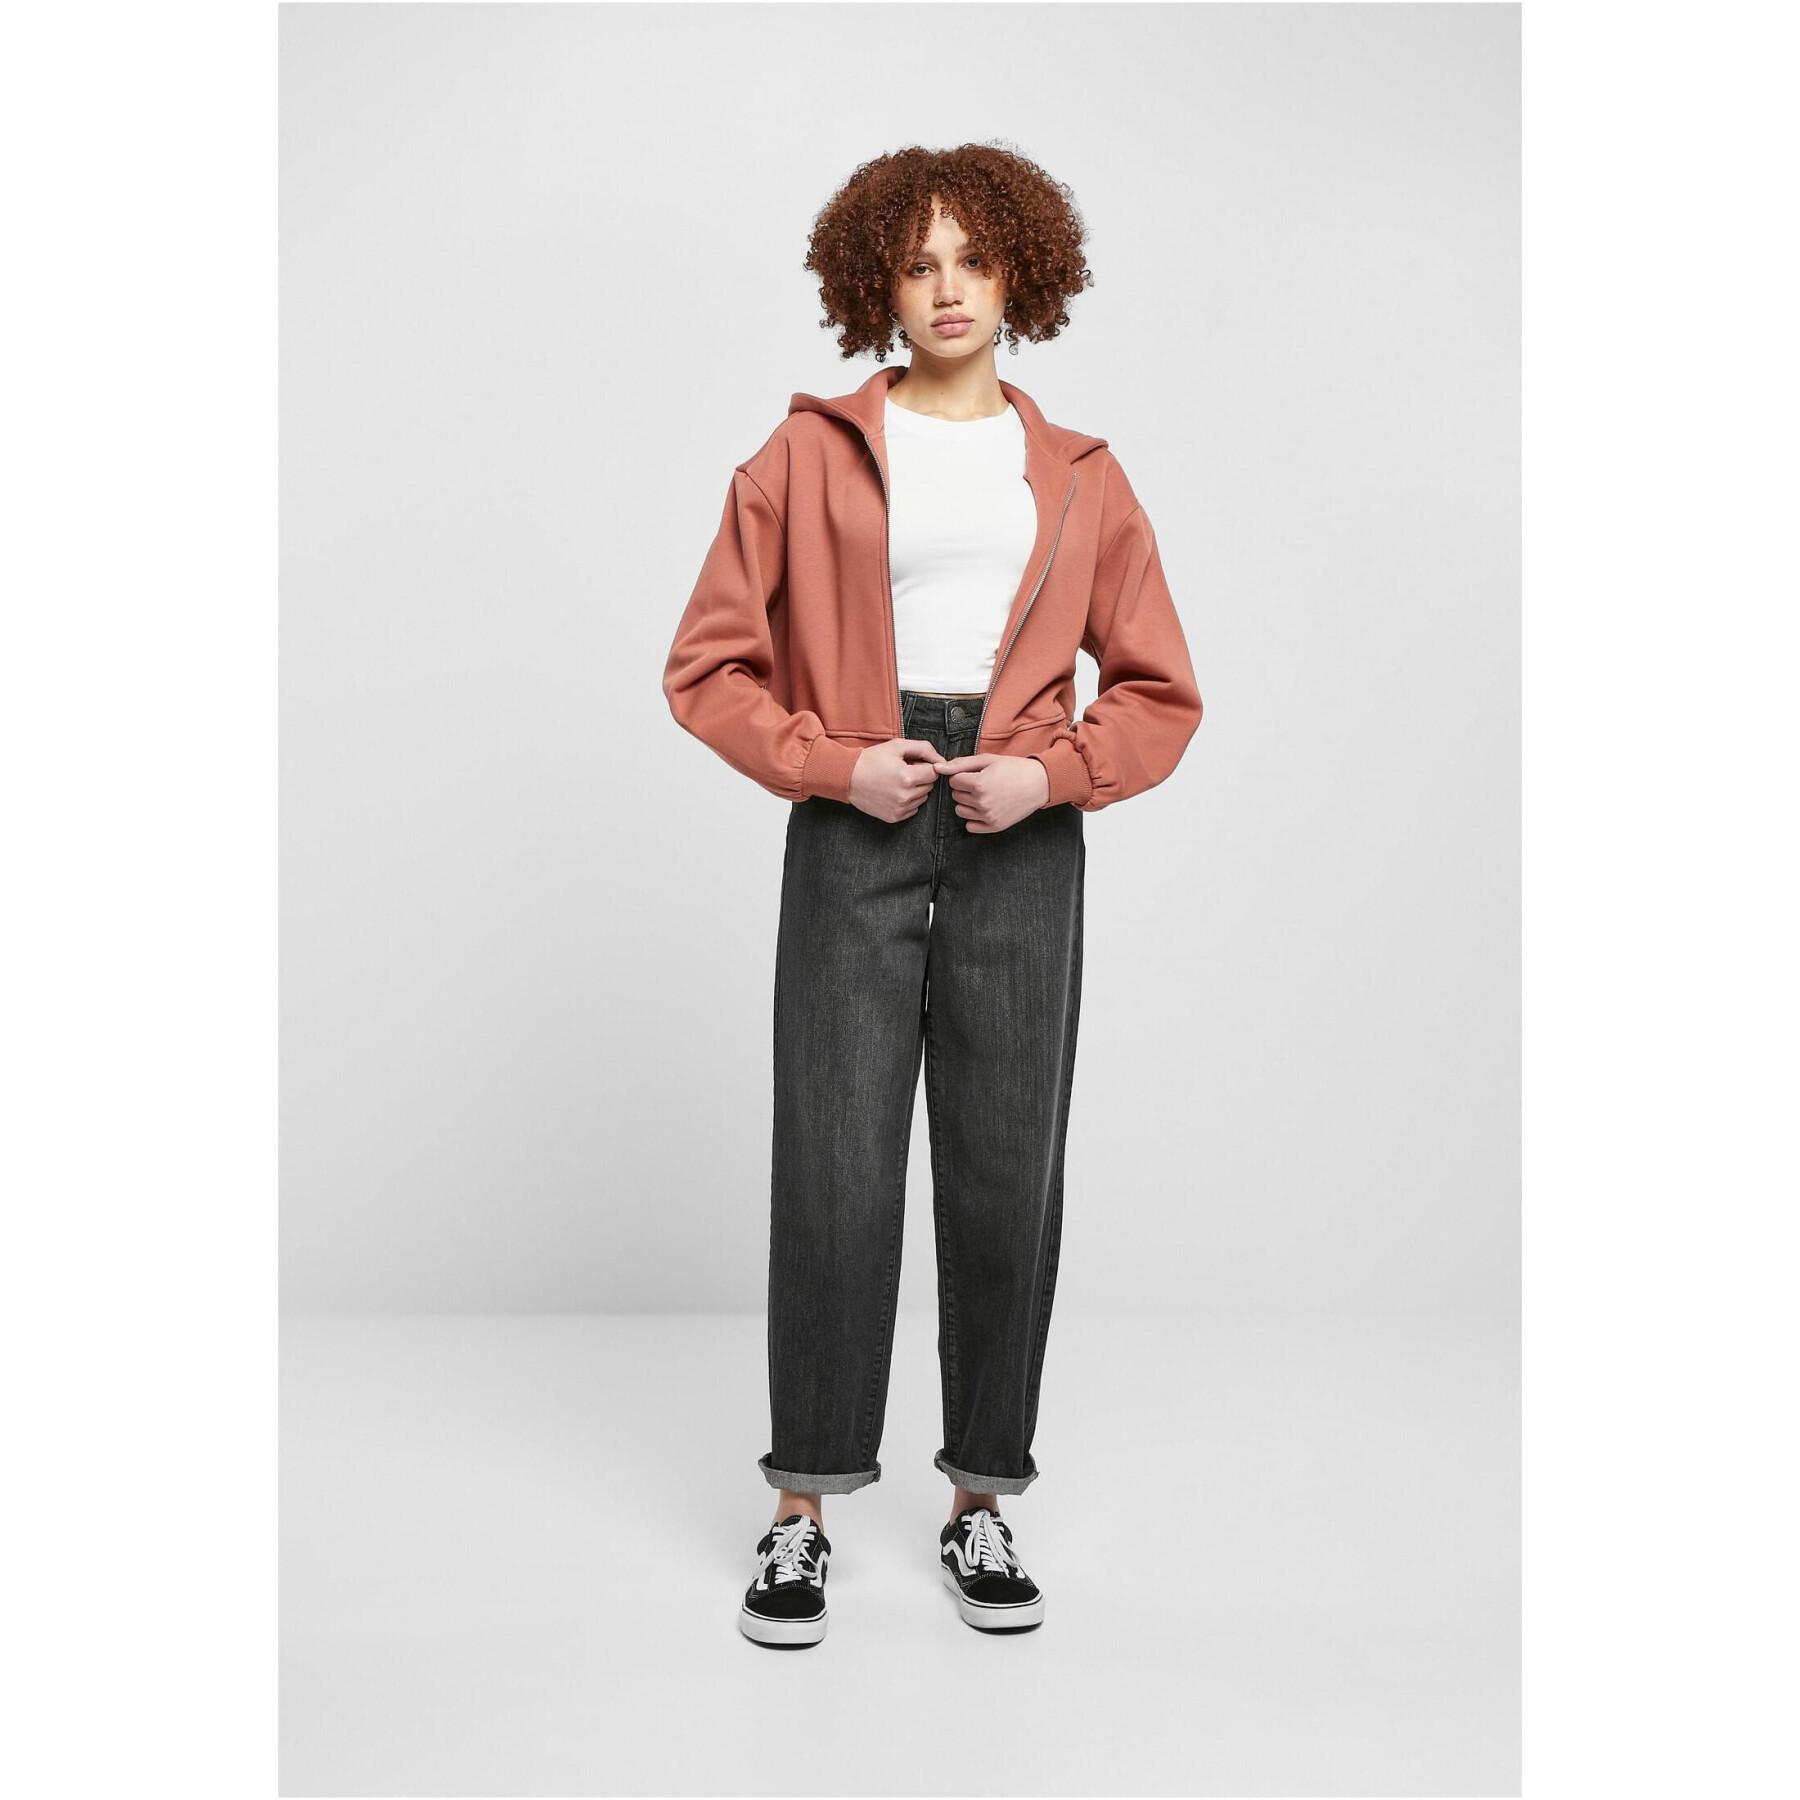 Jacket zipped court oversize femme Urban Classics